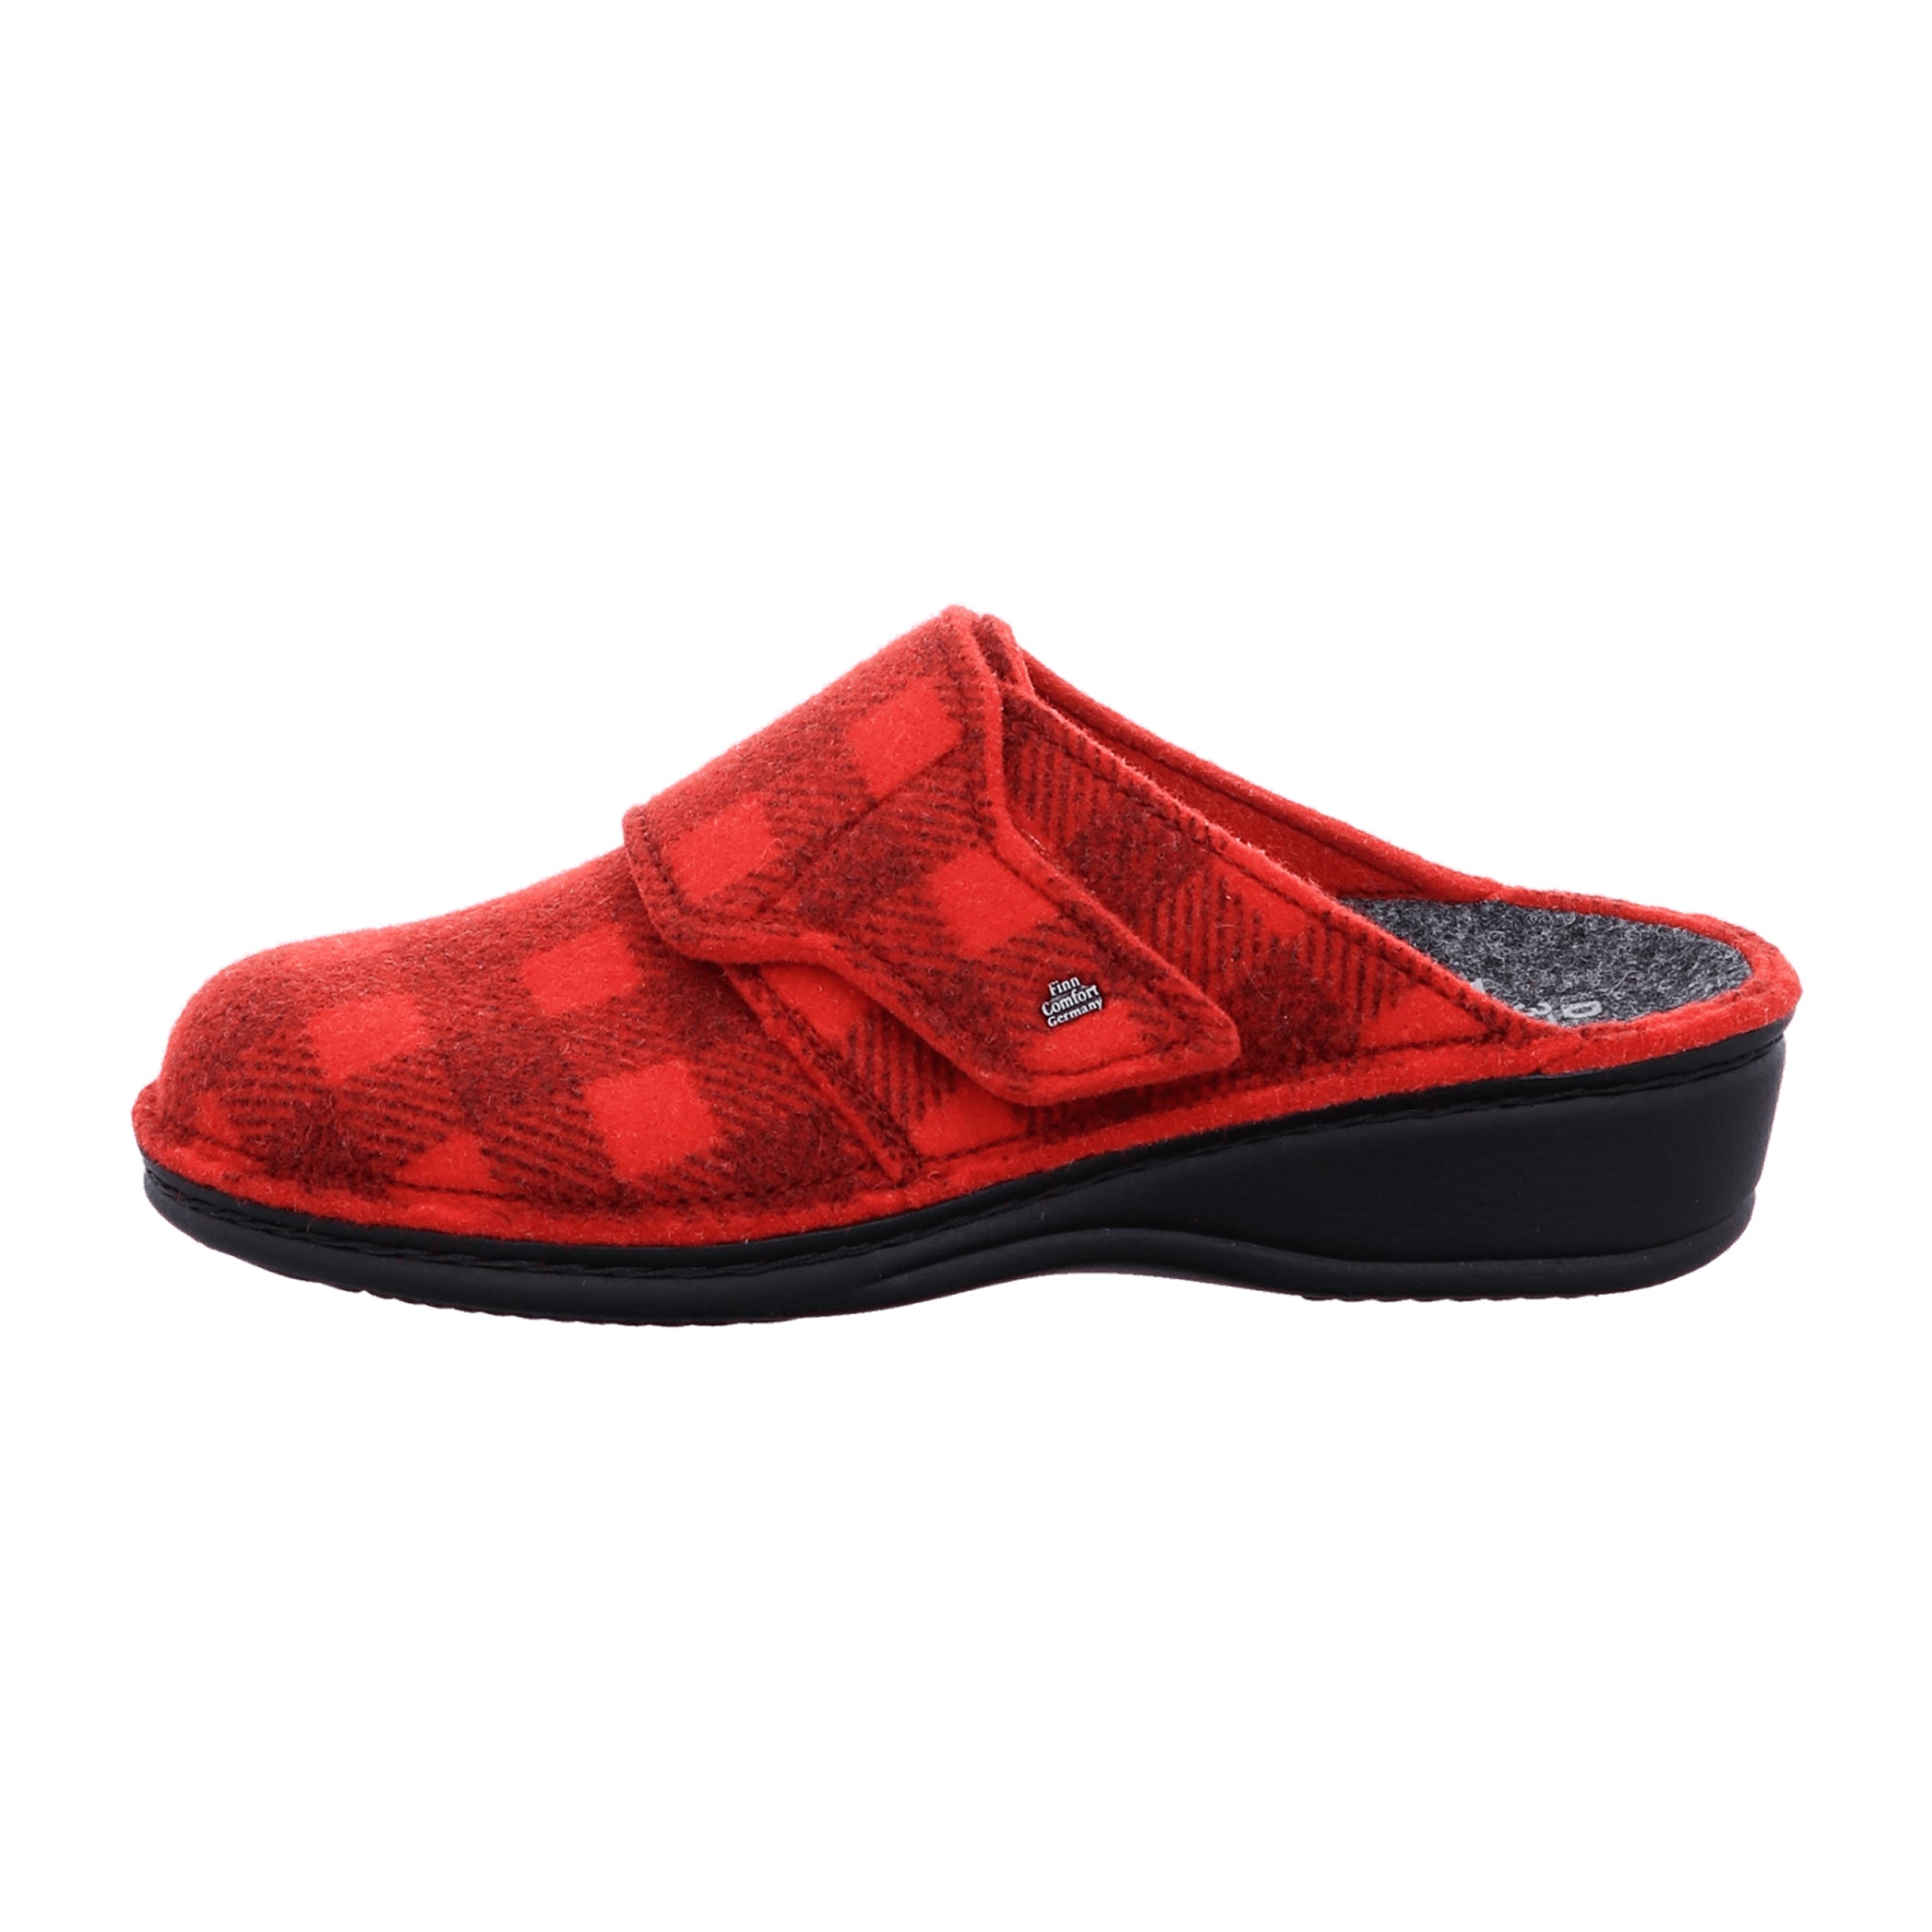 Finn Comfort Andermatt Women’s Red Comfort Slippers - Stylish & Durable